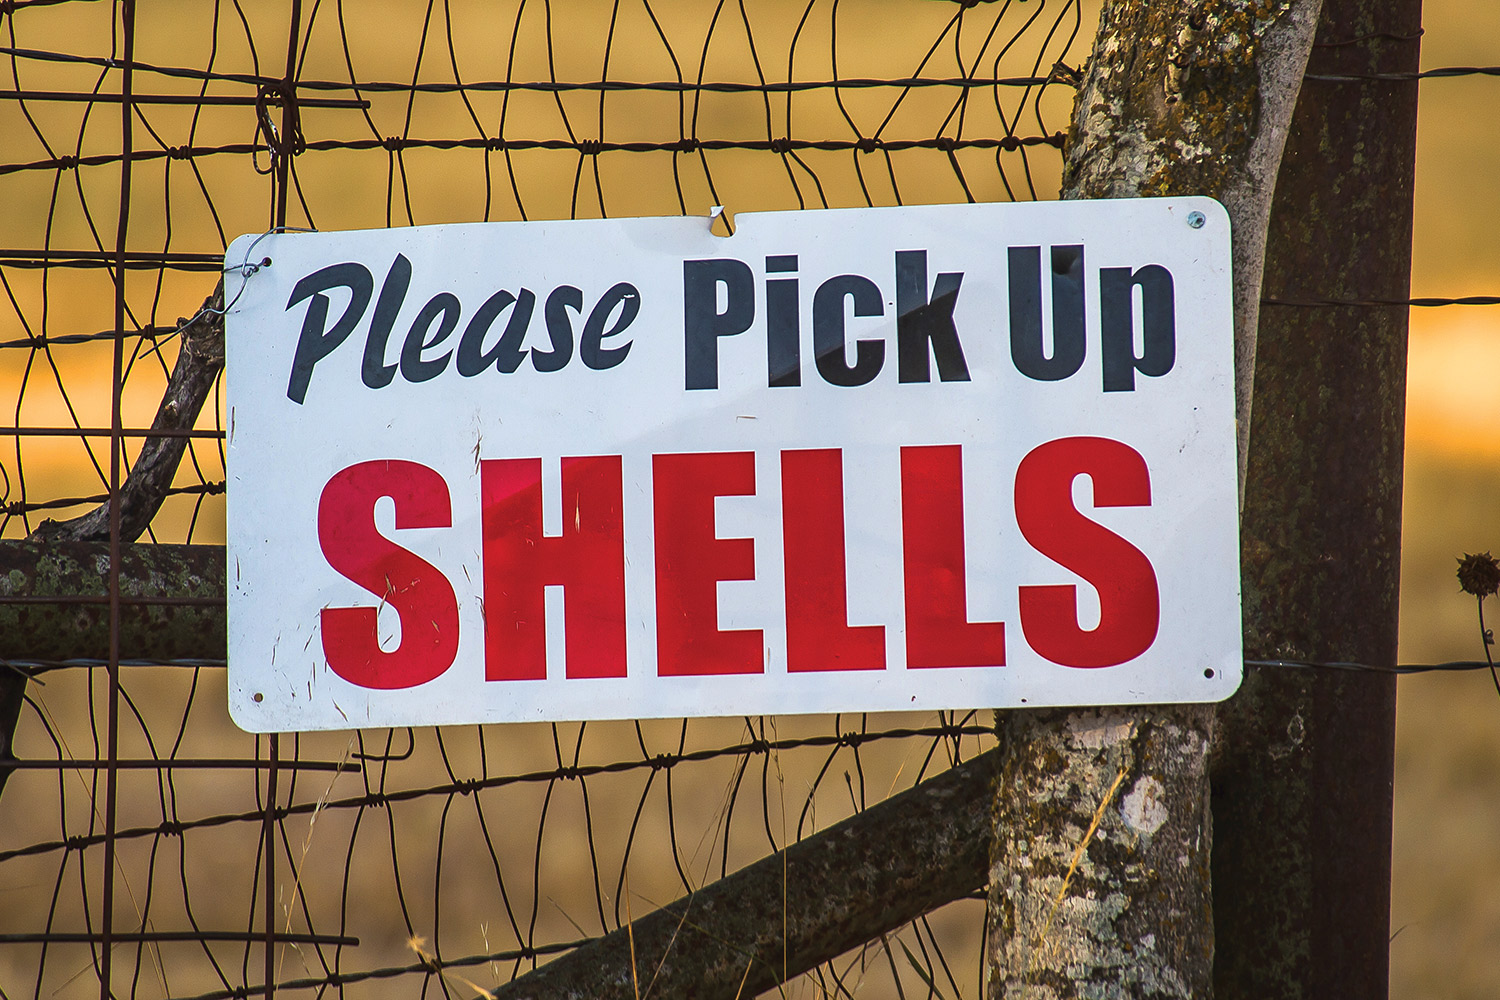 sign reminds hunters to pick up shotgun shells